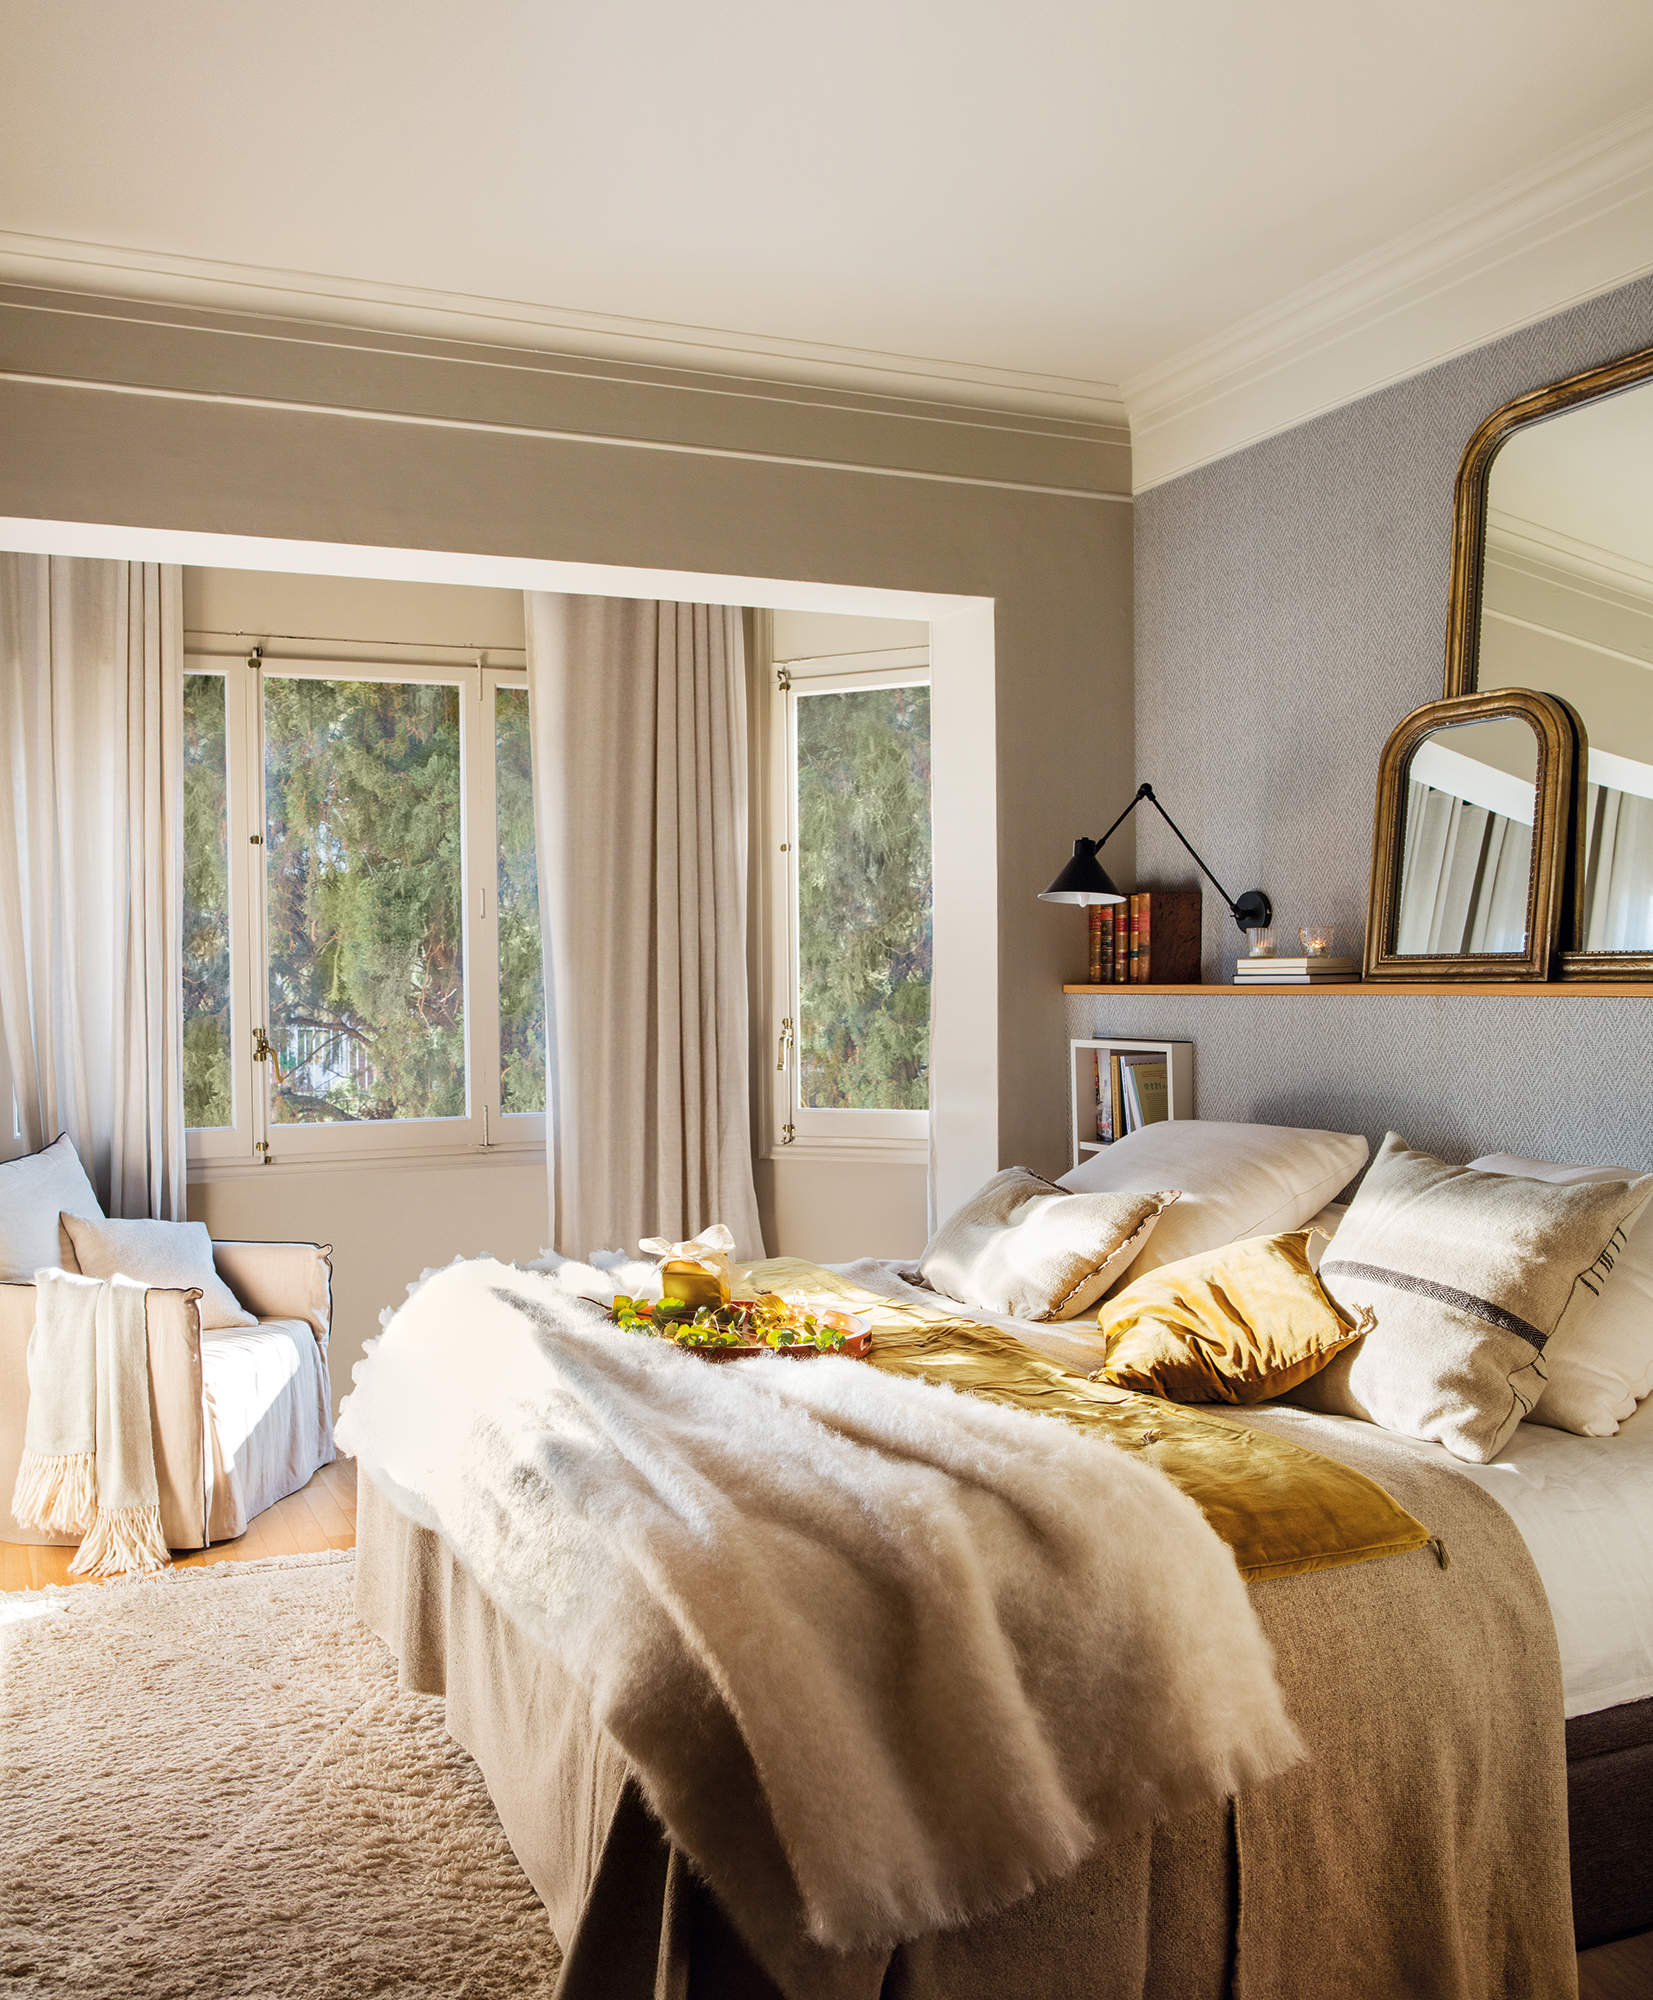 Dormitorio principal con textiles cálidos, decorado en tonos neutros y con pinceladas de dorado.